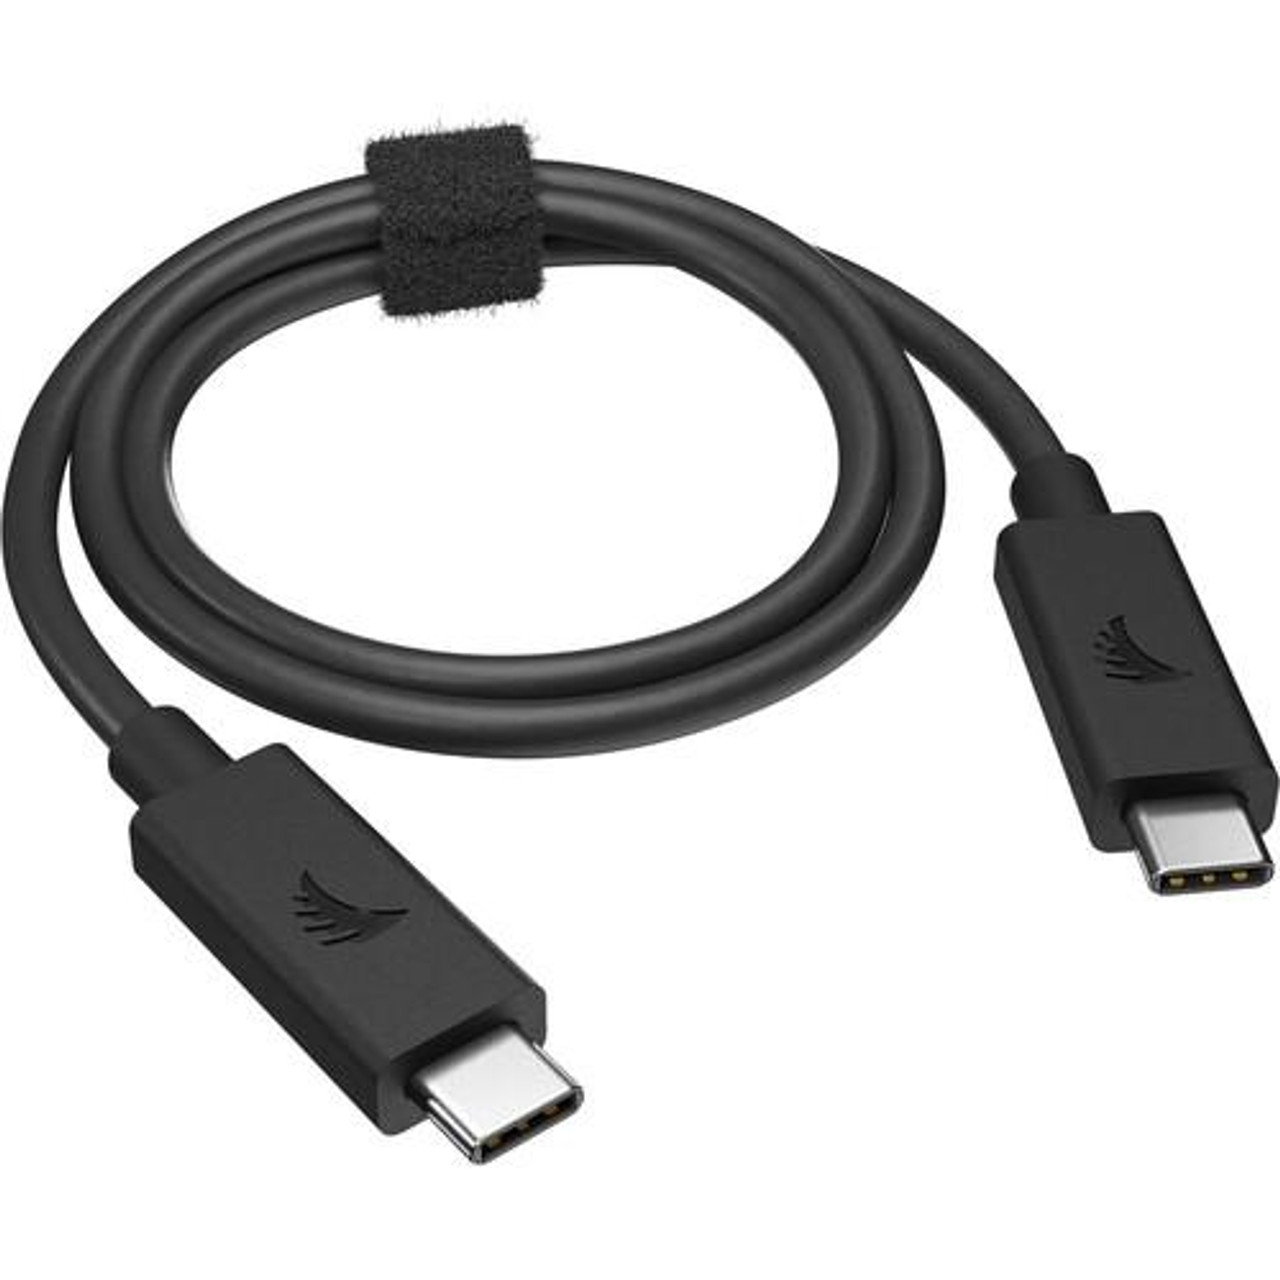 Angelbird USB 3.2 Cable C-C, Fast Data Transfer